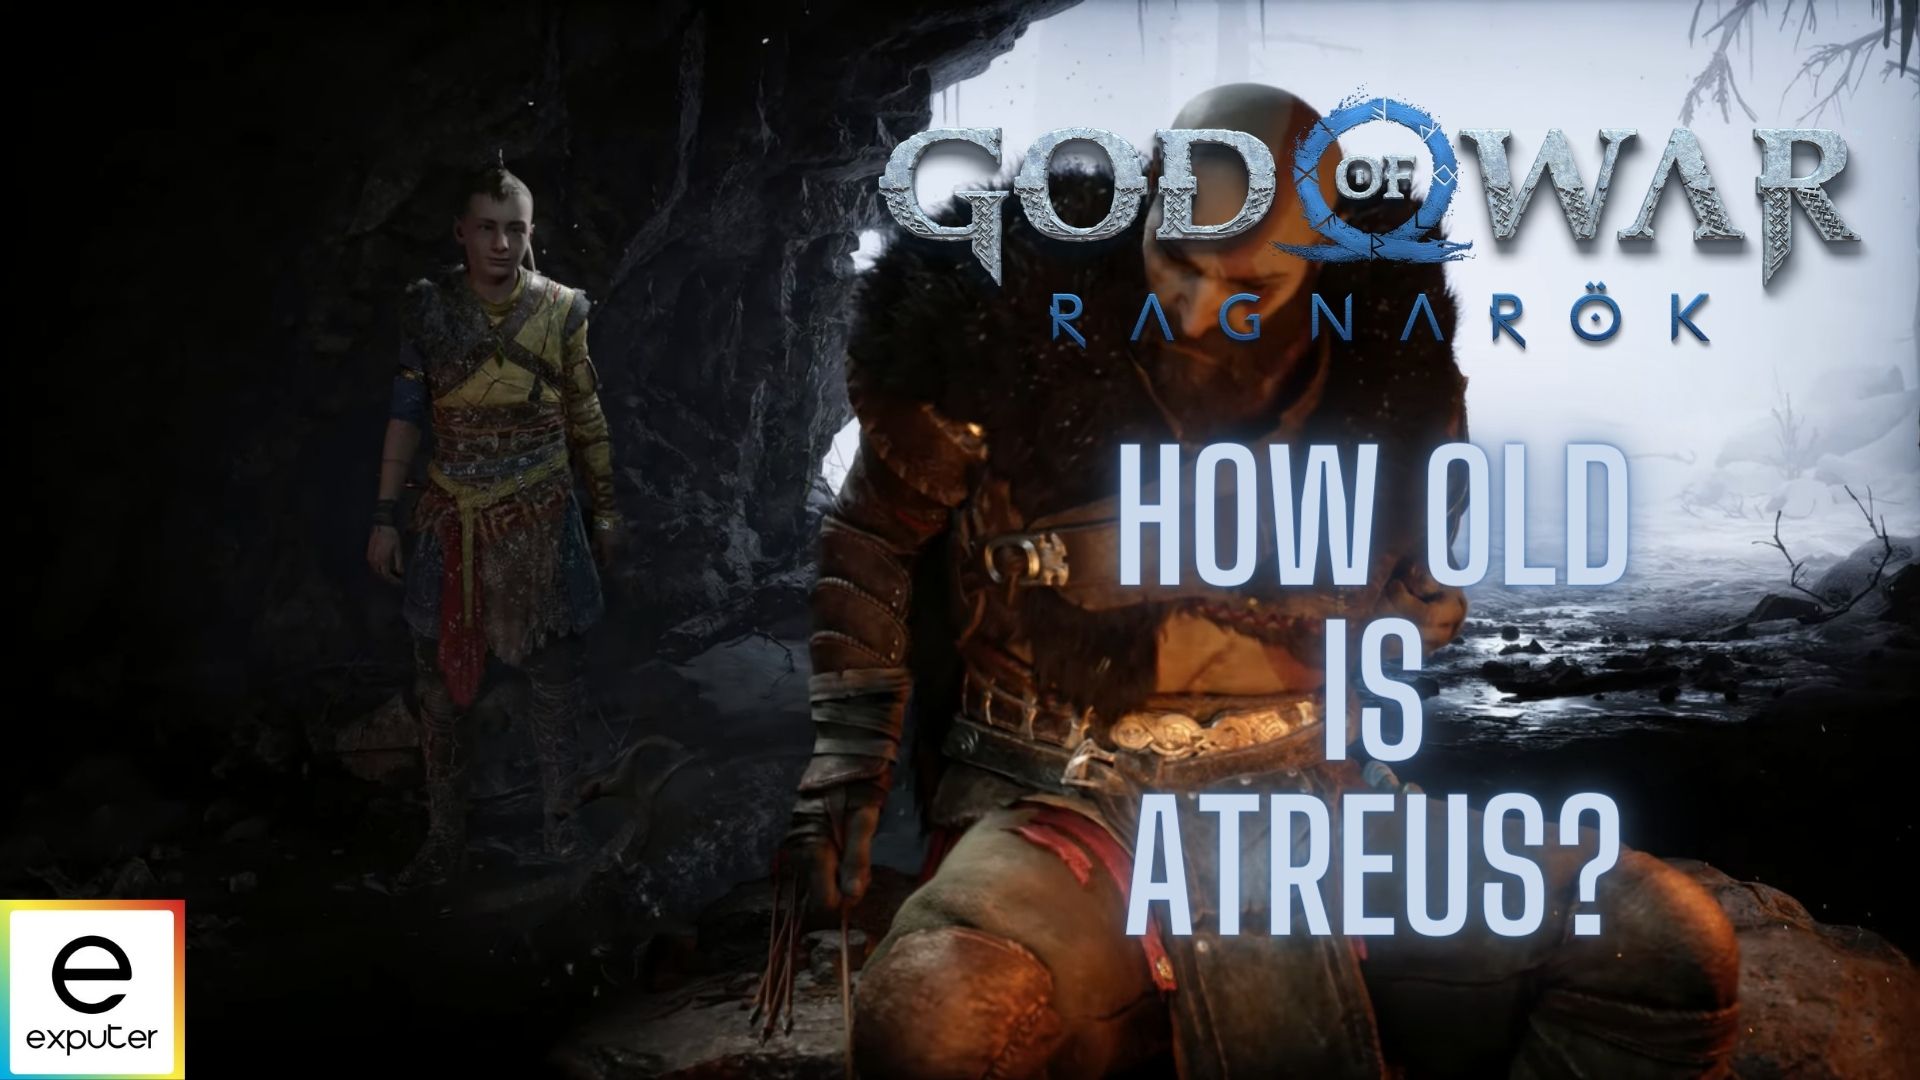 atreus age in god of war